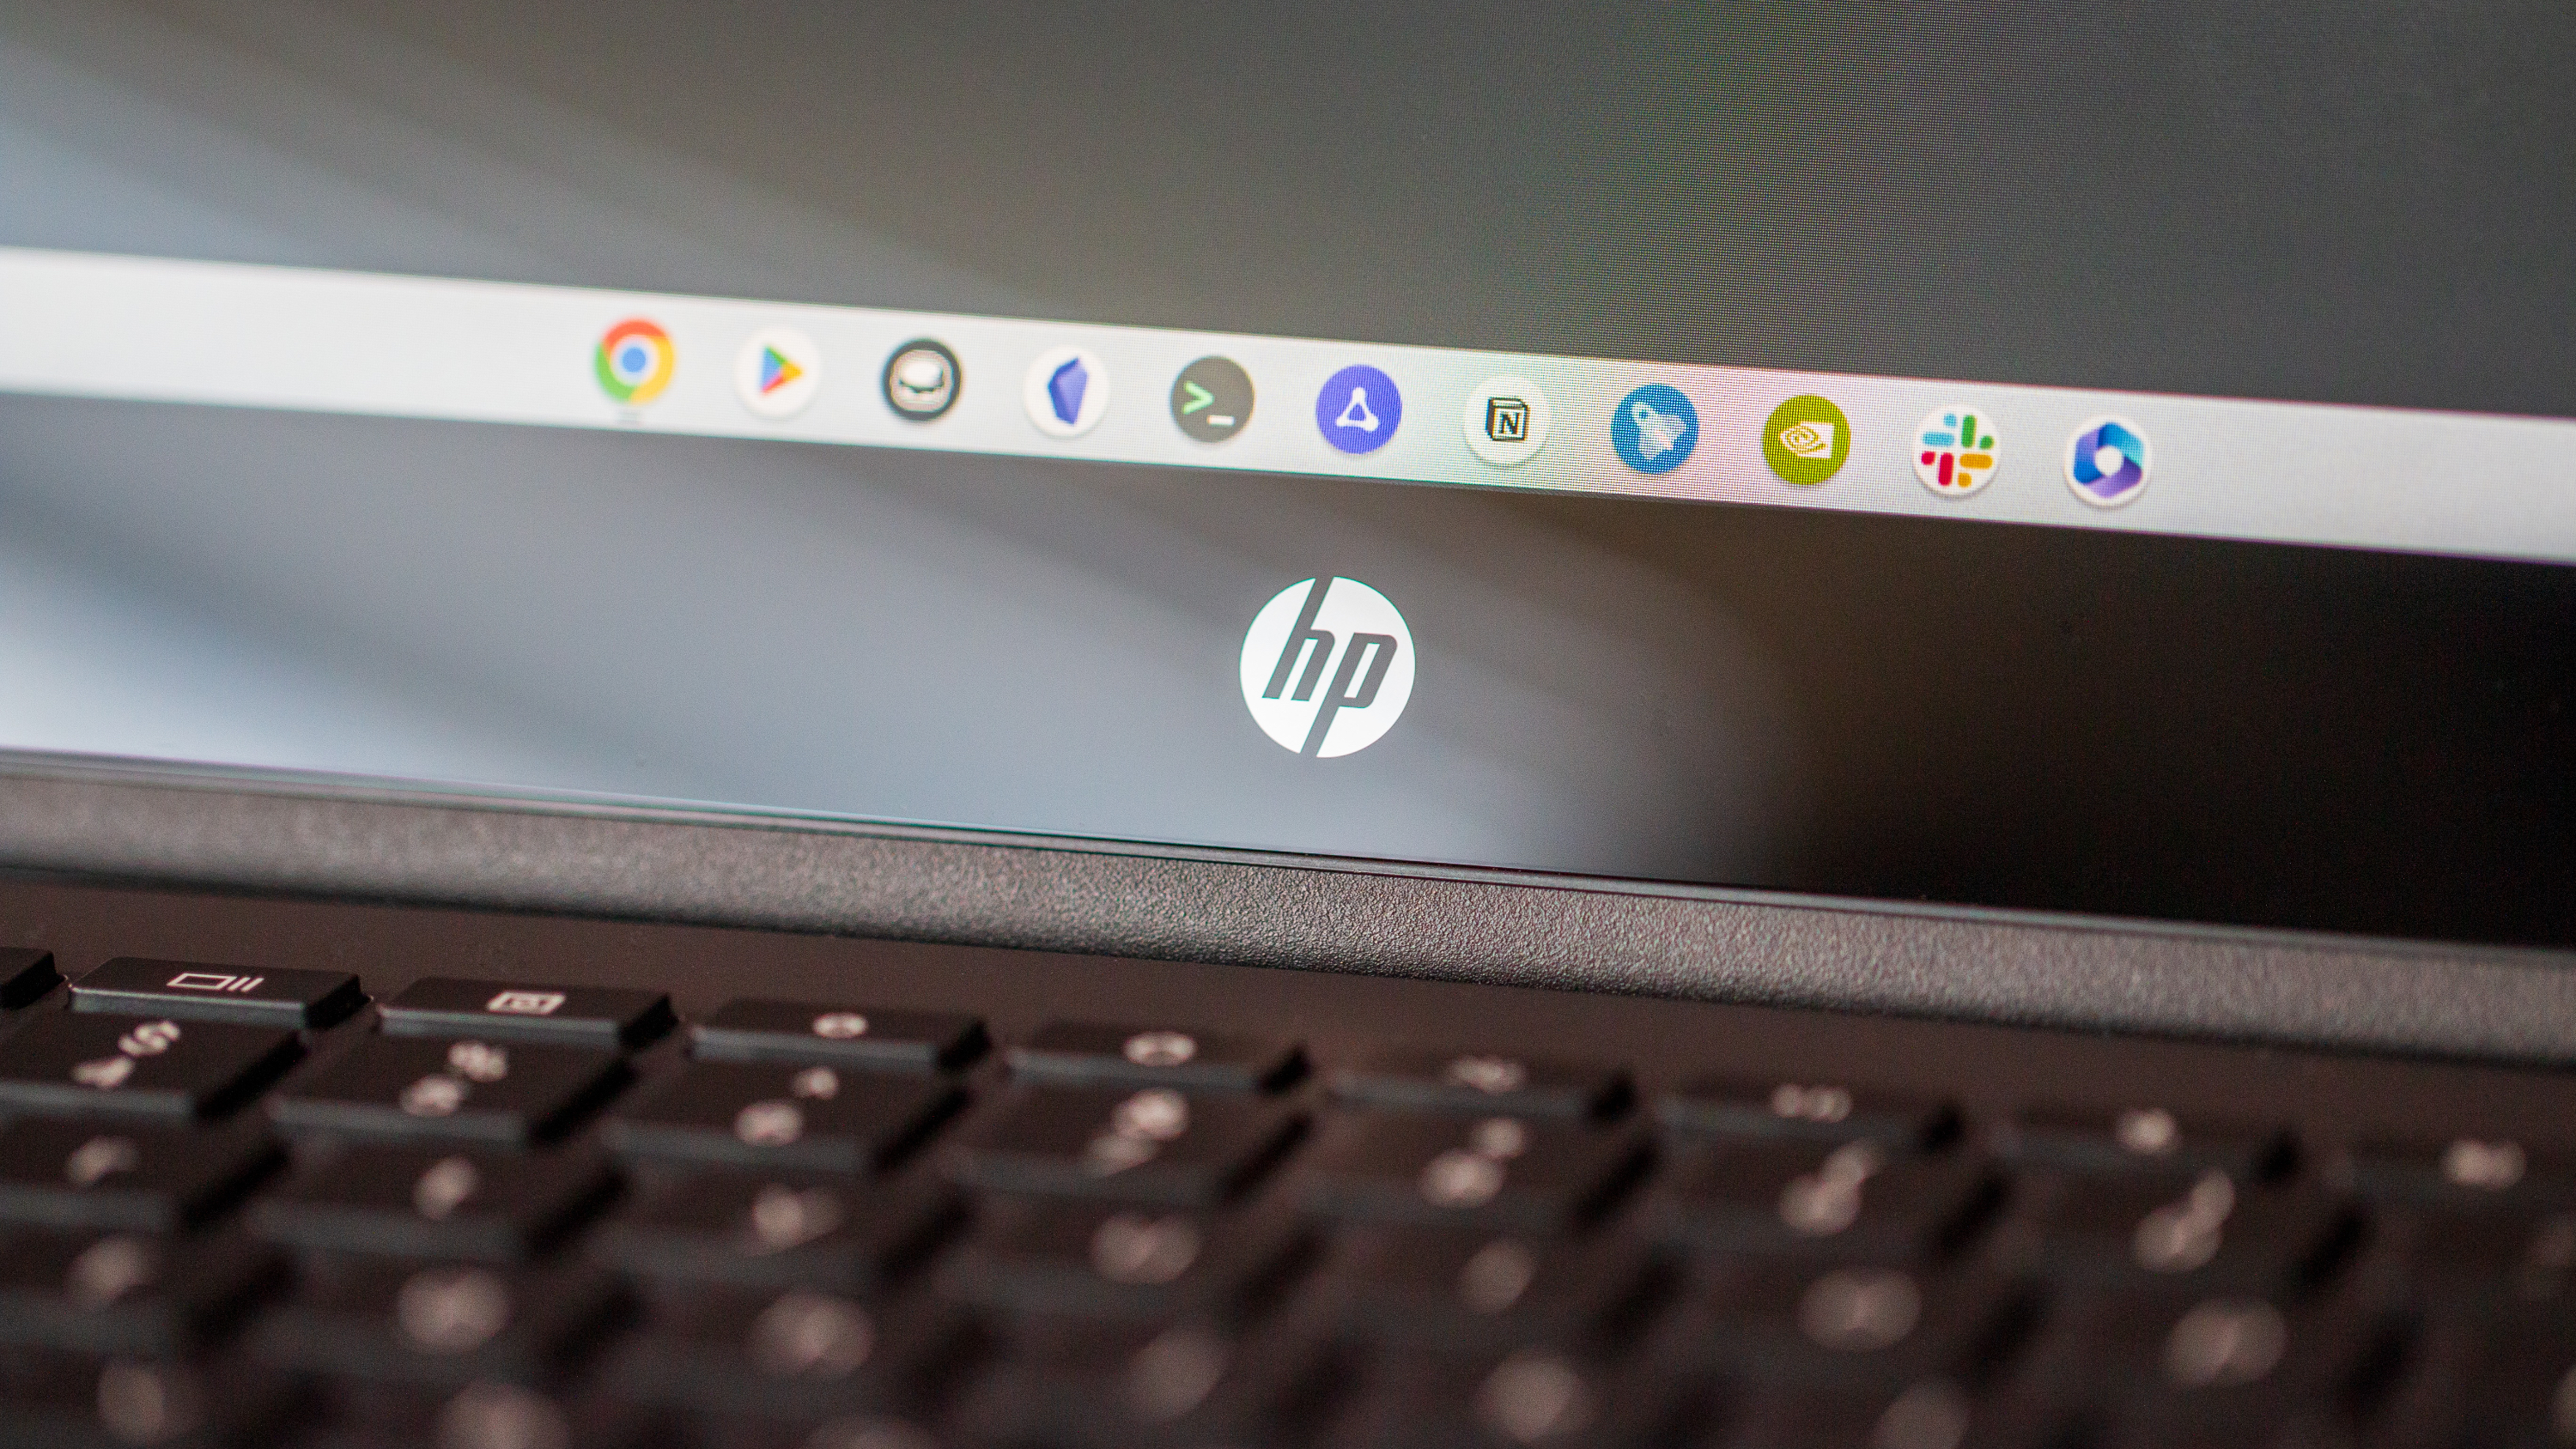 HP Chromebook x360 13b close-up on HP logo